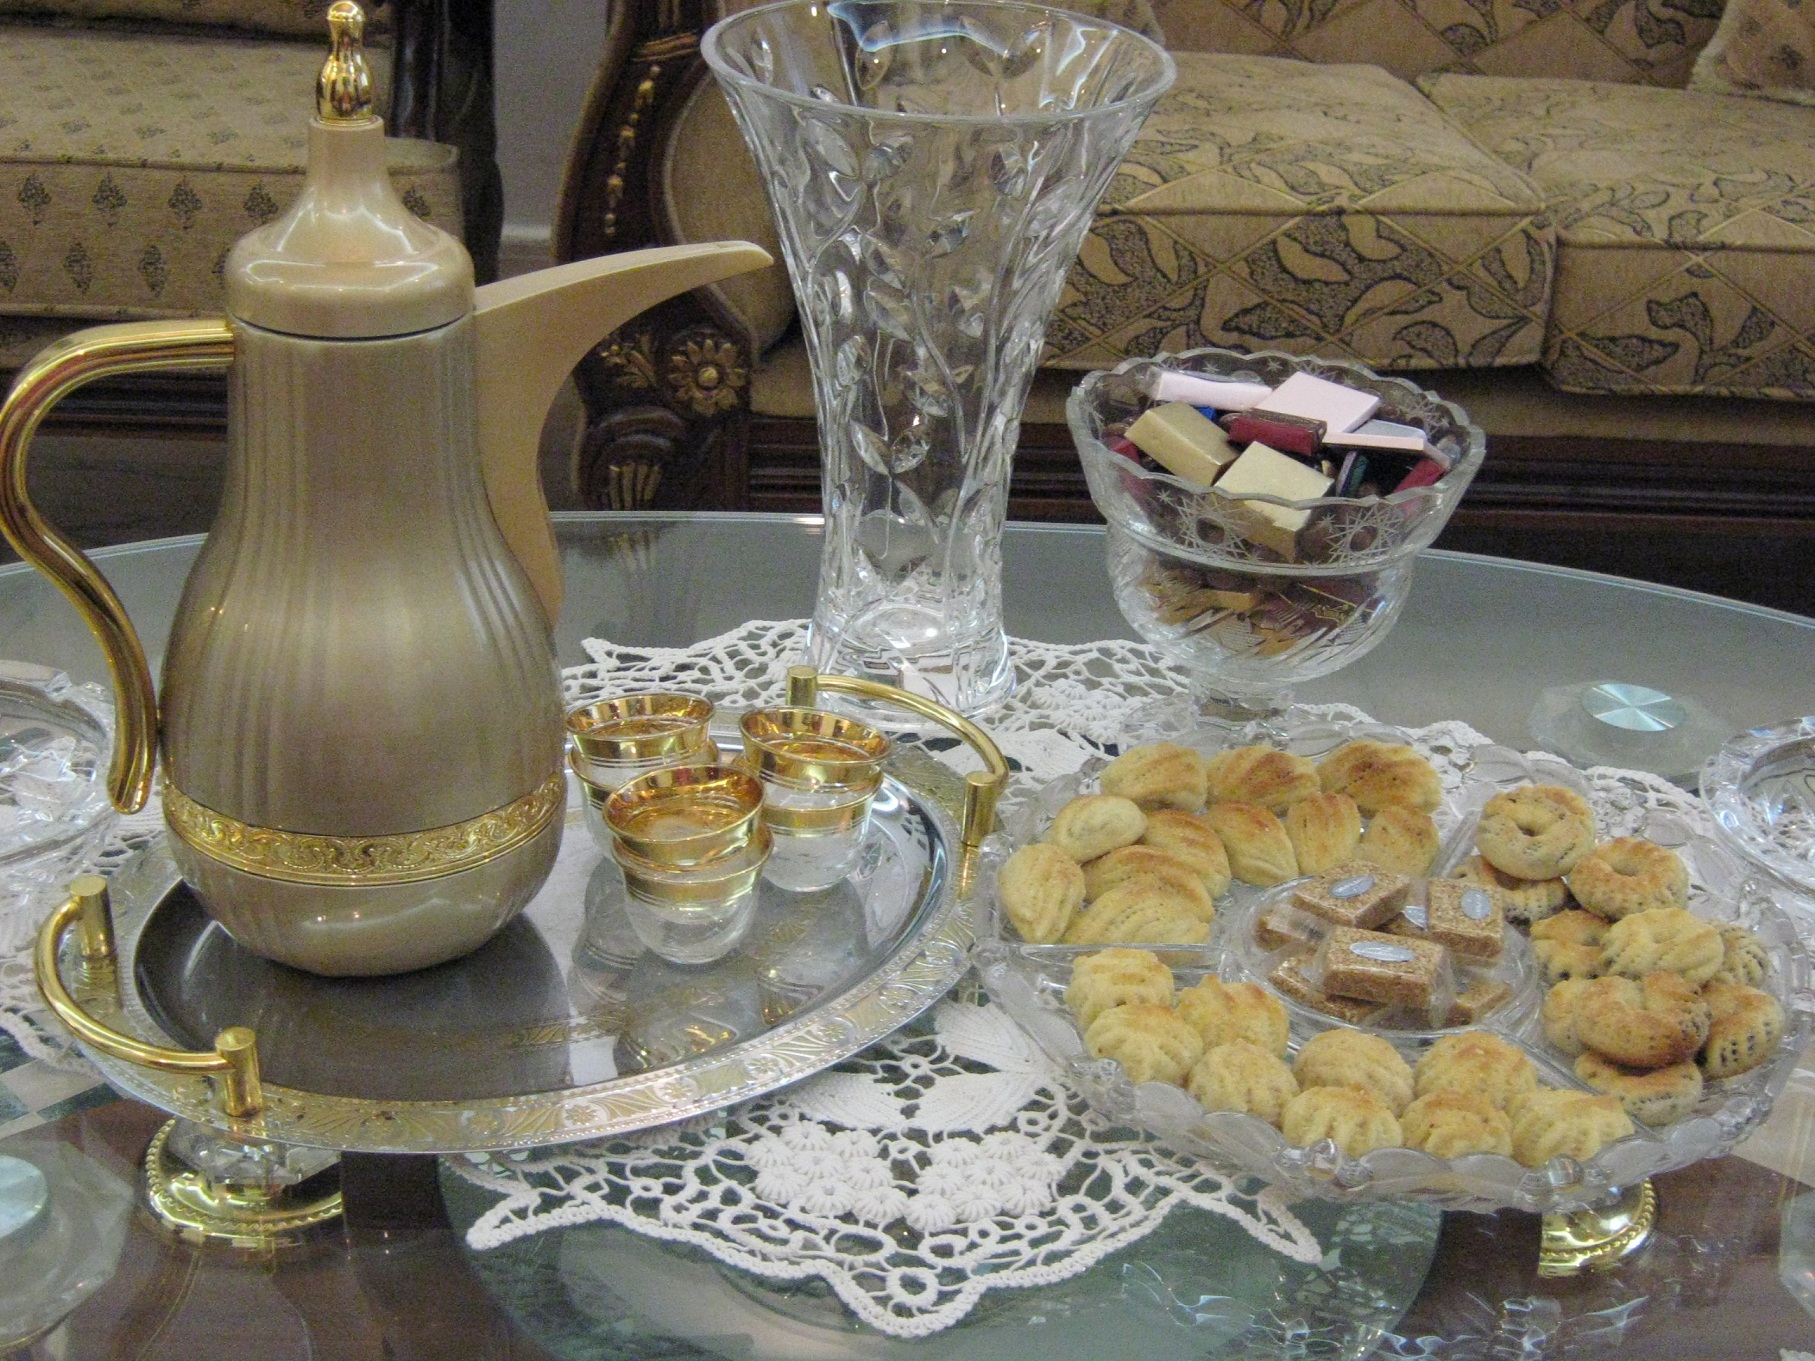 Cafea araba cu cardamom pentru ocazii -“Ahwa sada”